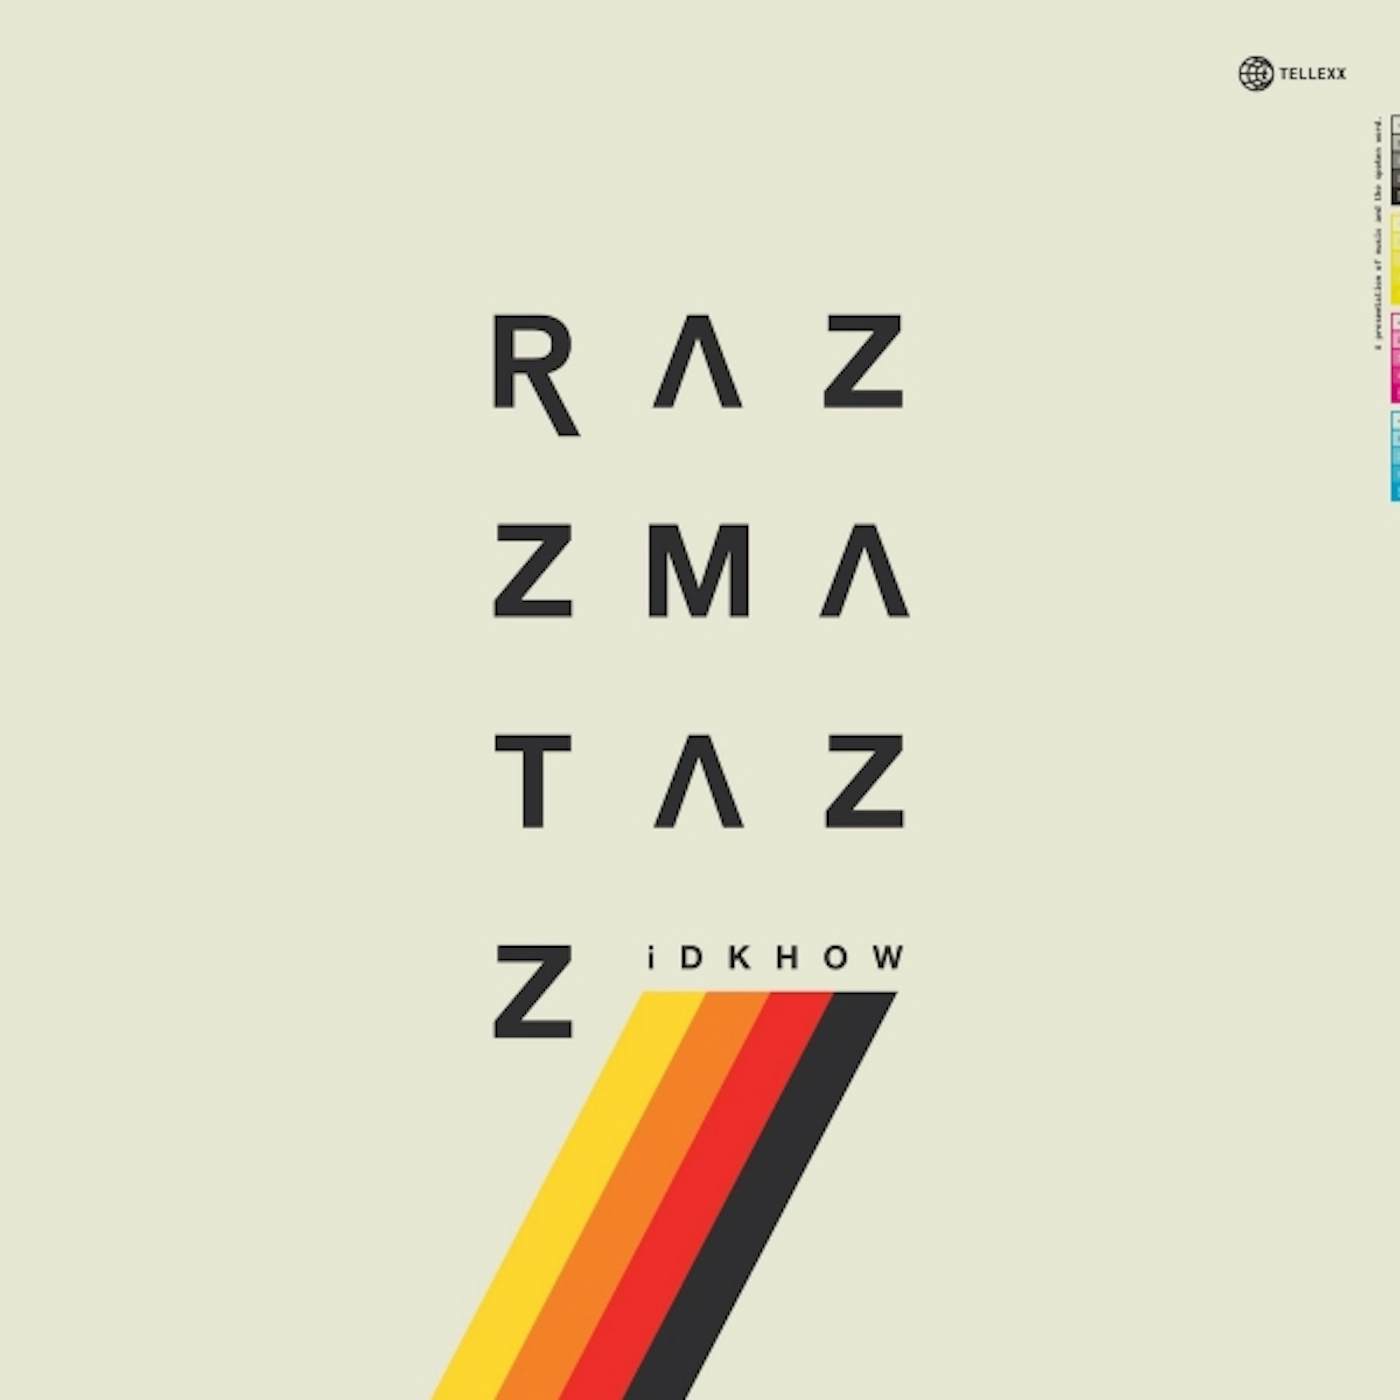 I DONT KNOW HOW BUT THEY FOUND ME RAZZMATAZZ Vinyl Record